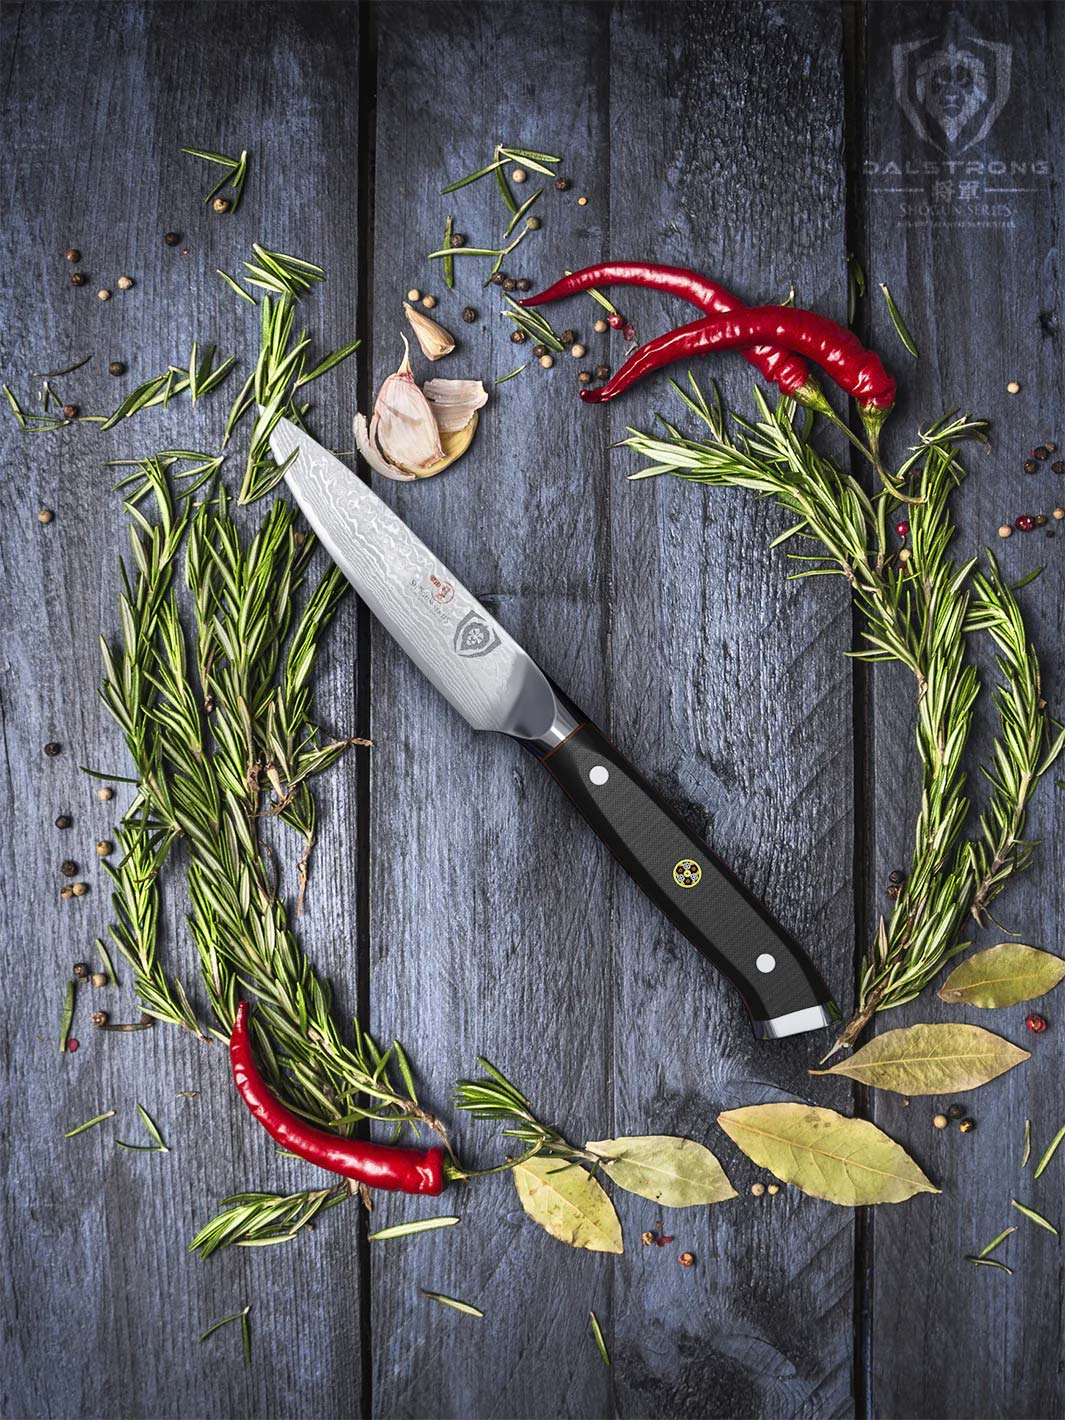 Paring Knife 3.5" | Shogun Series ELITE | Dalstrong ©